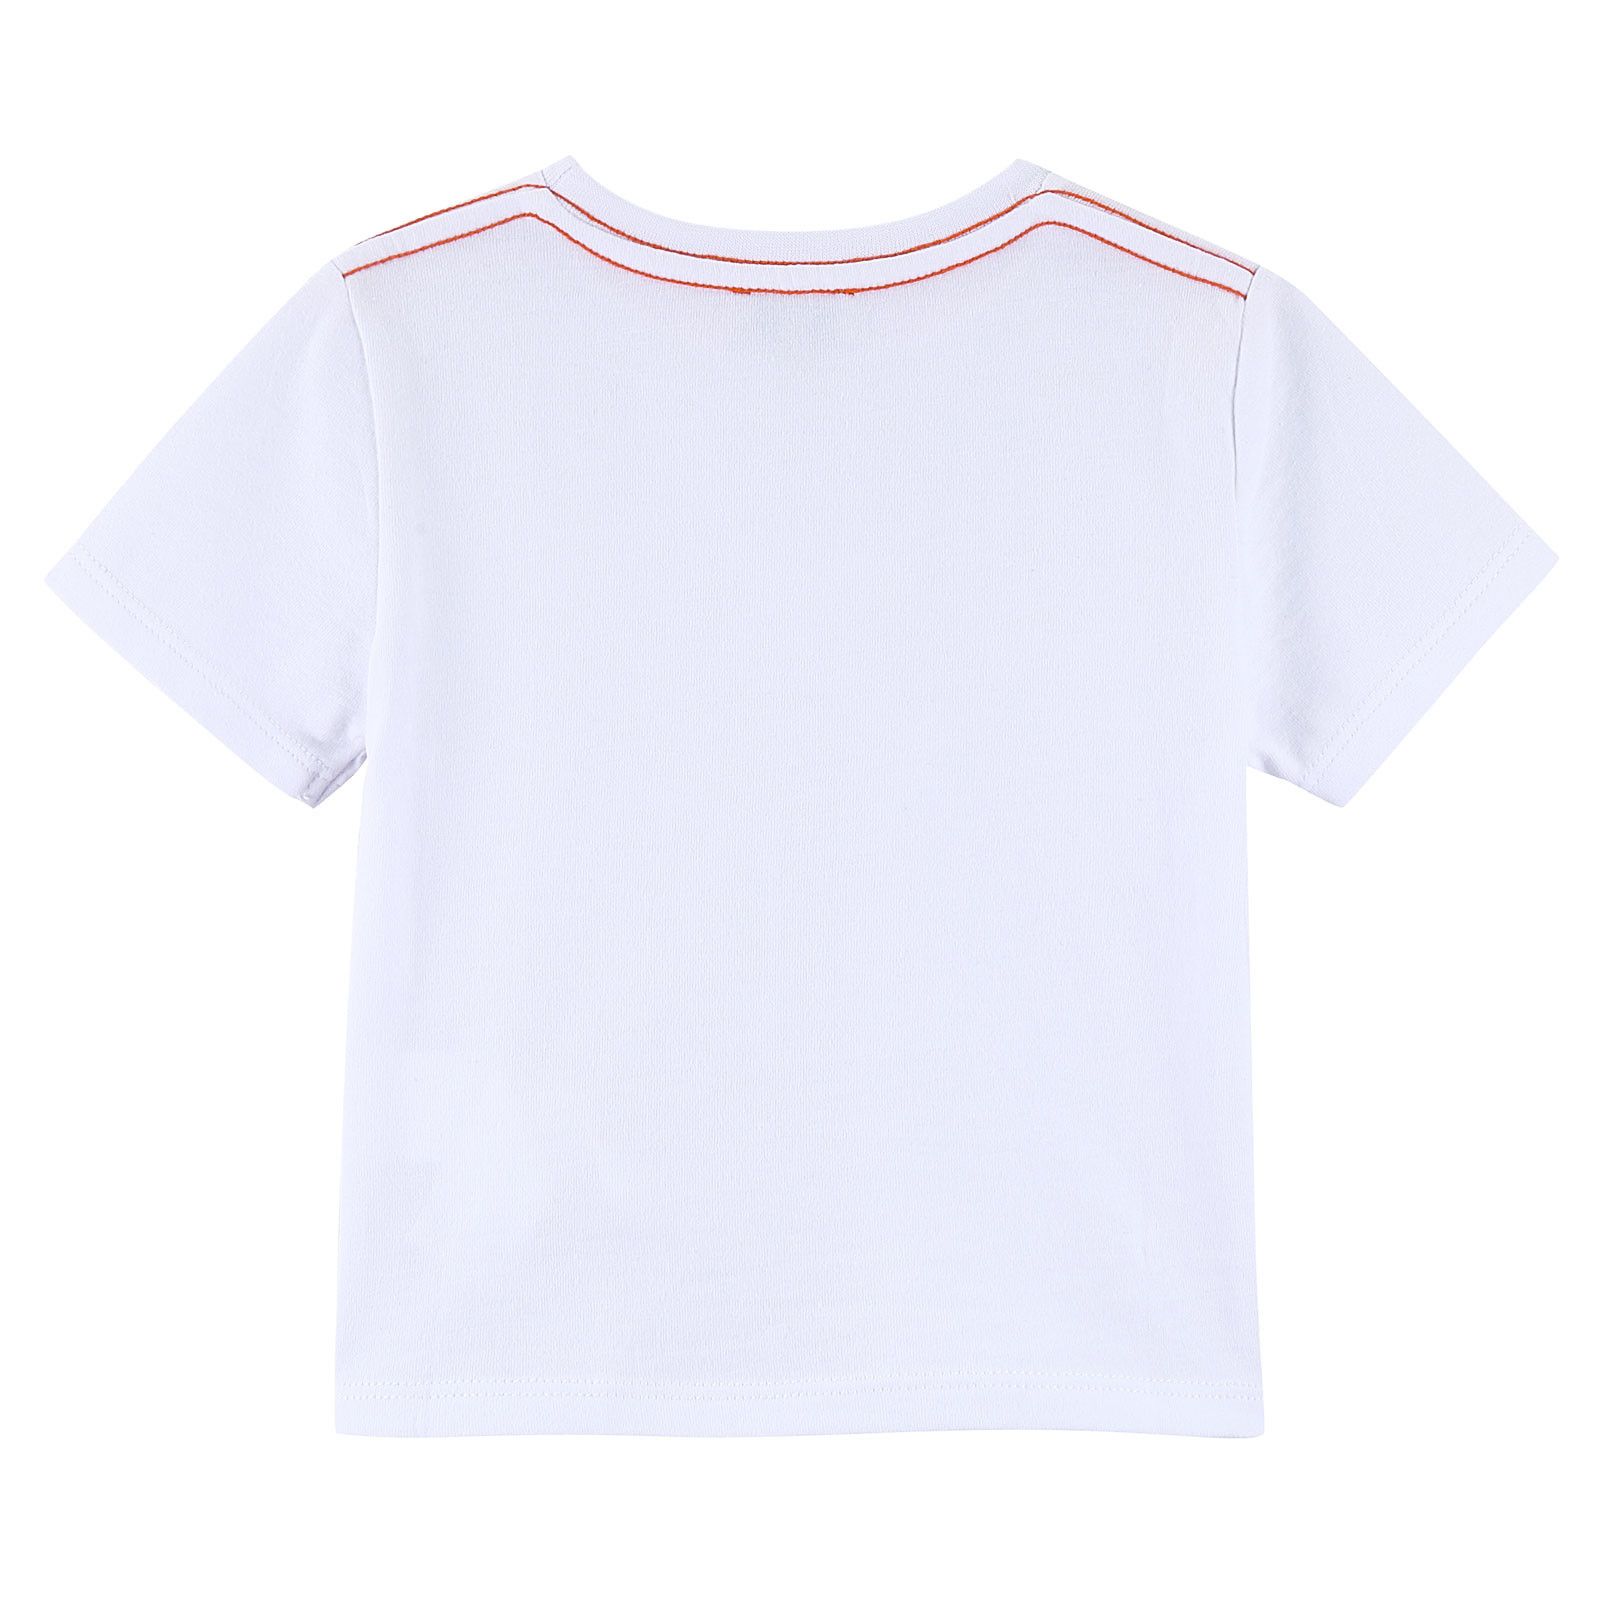 Boys White Cotton T-Shirt With Multicolor Horse Print - CÉMAROSE | Children's Fashion Store - 2